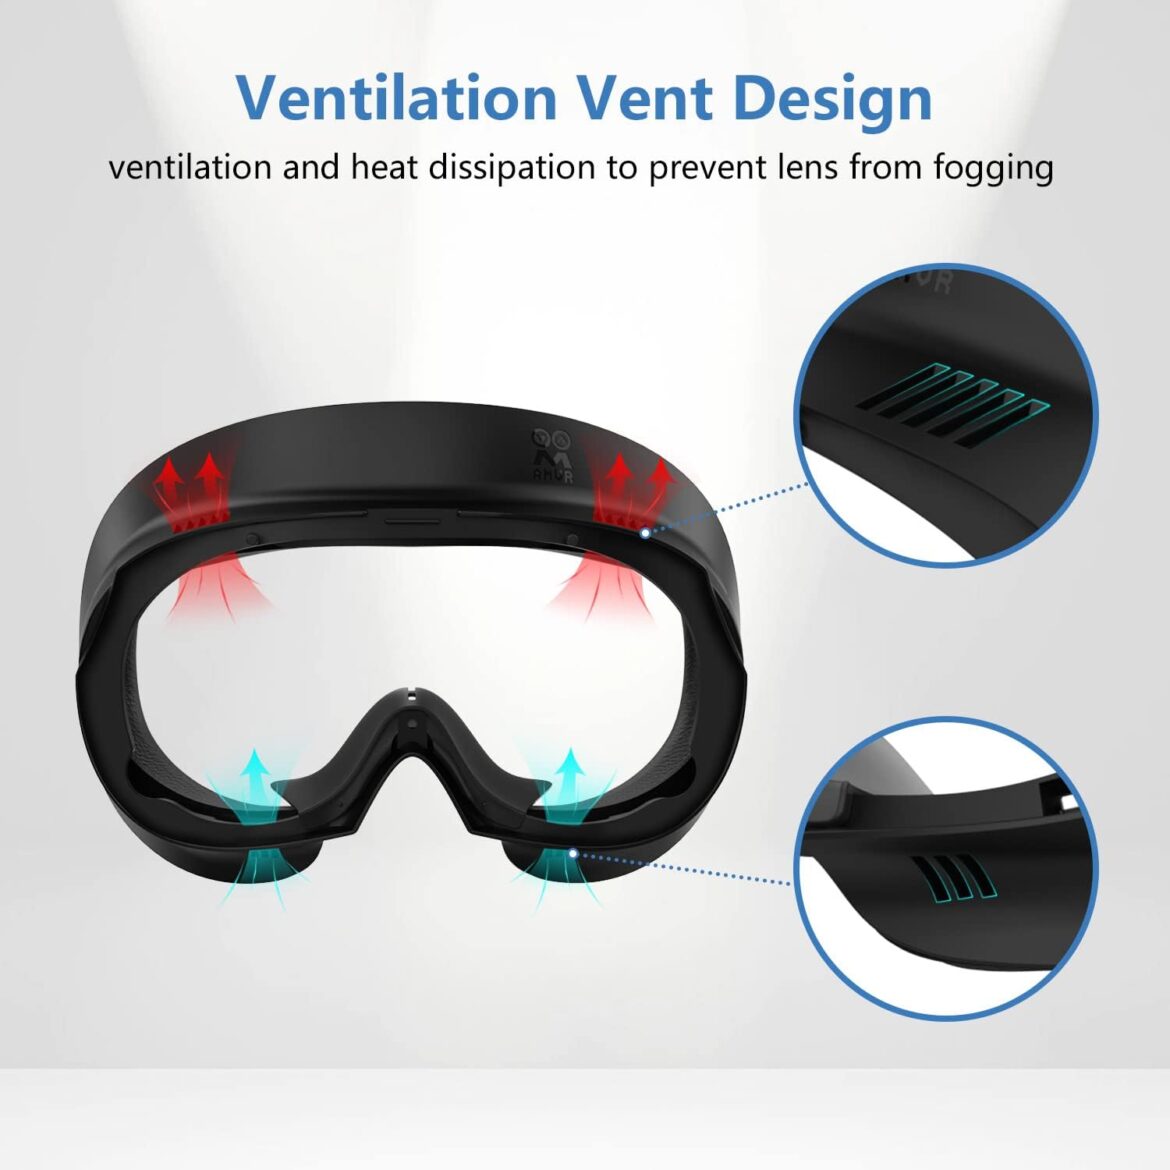 61 gxP1XyPL. AC SL1500 AMVR VR Facial Interface Bracket Face Cover für Pico 4 - Komfort und Hygiene für Virtual Reality im Test